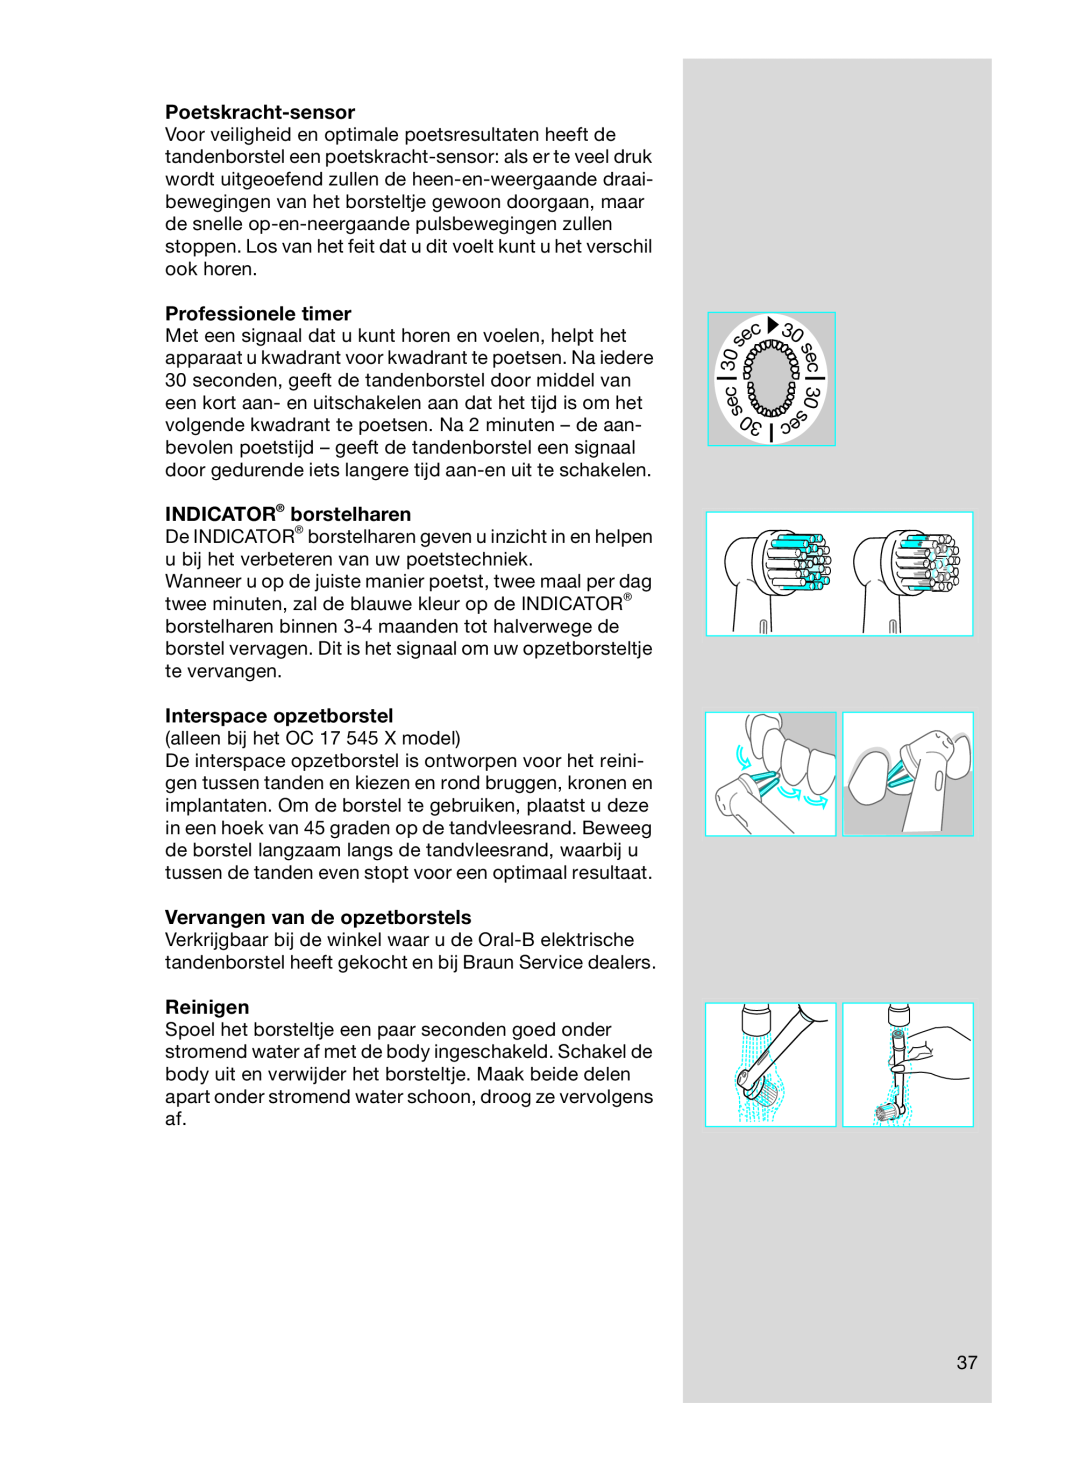 Braun OC17525 manual Poetskracht-sensor, Professionele timer, INDICATOR borstelharen, Interspace opzetborstel, Reinigen 